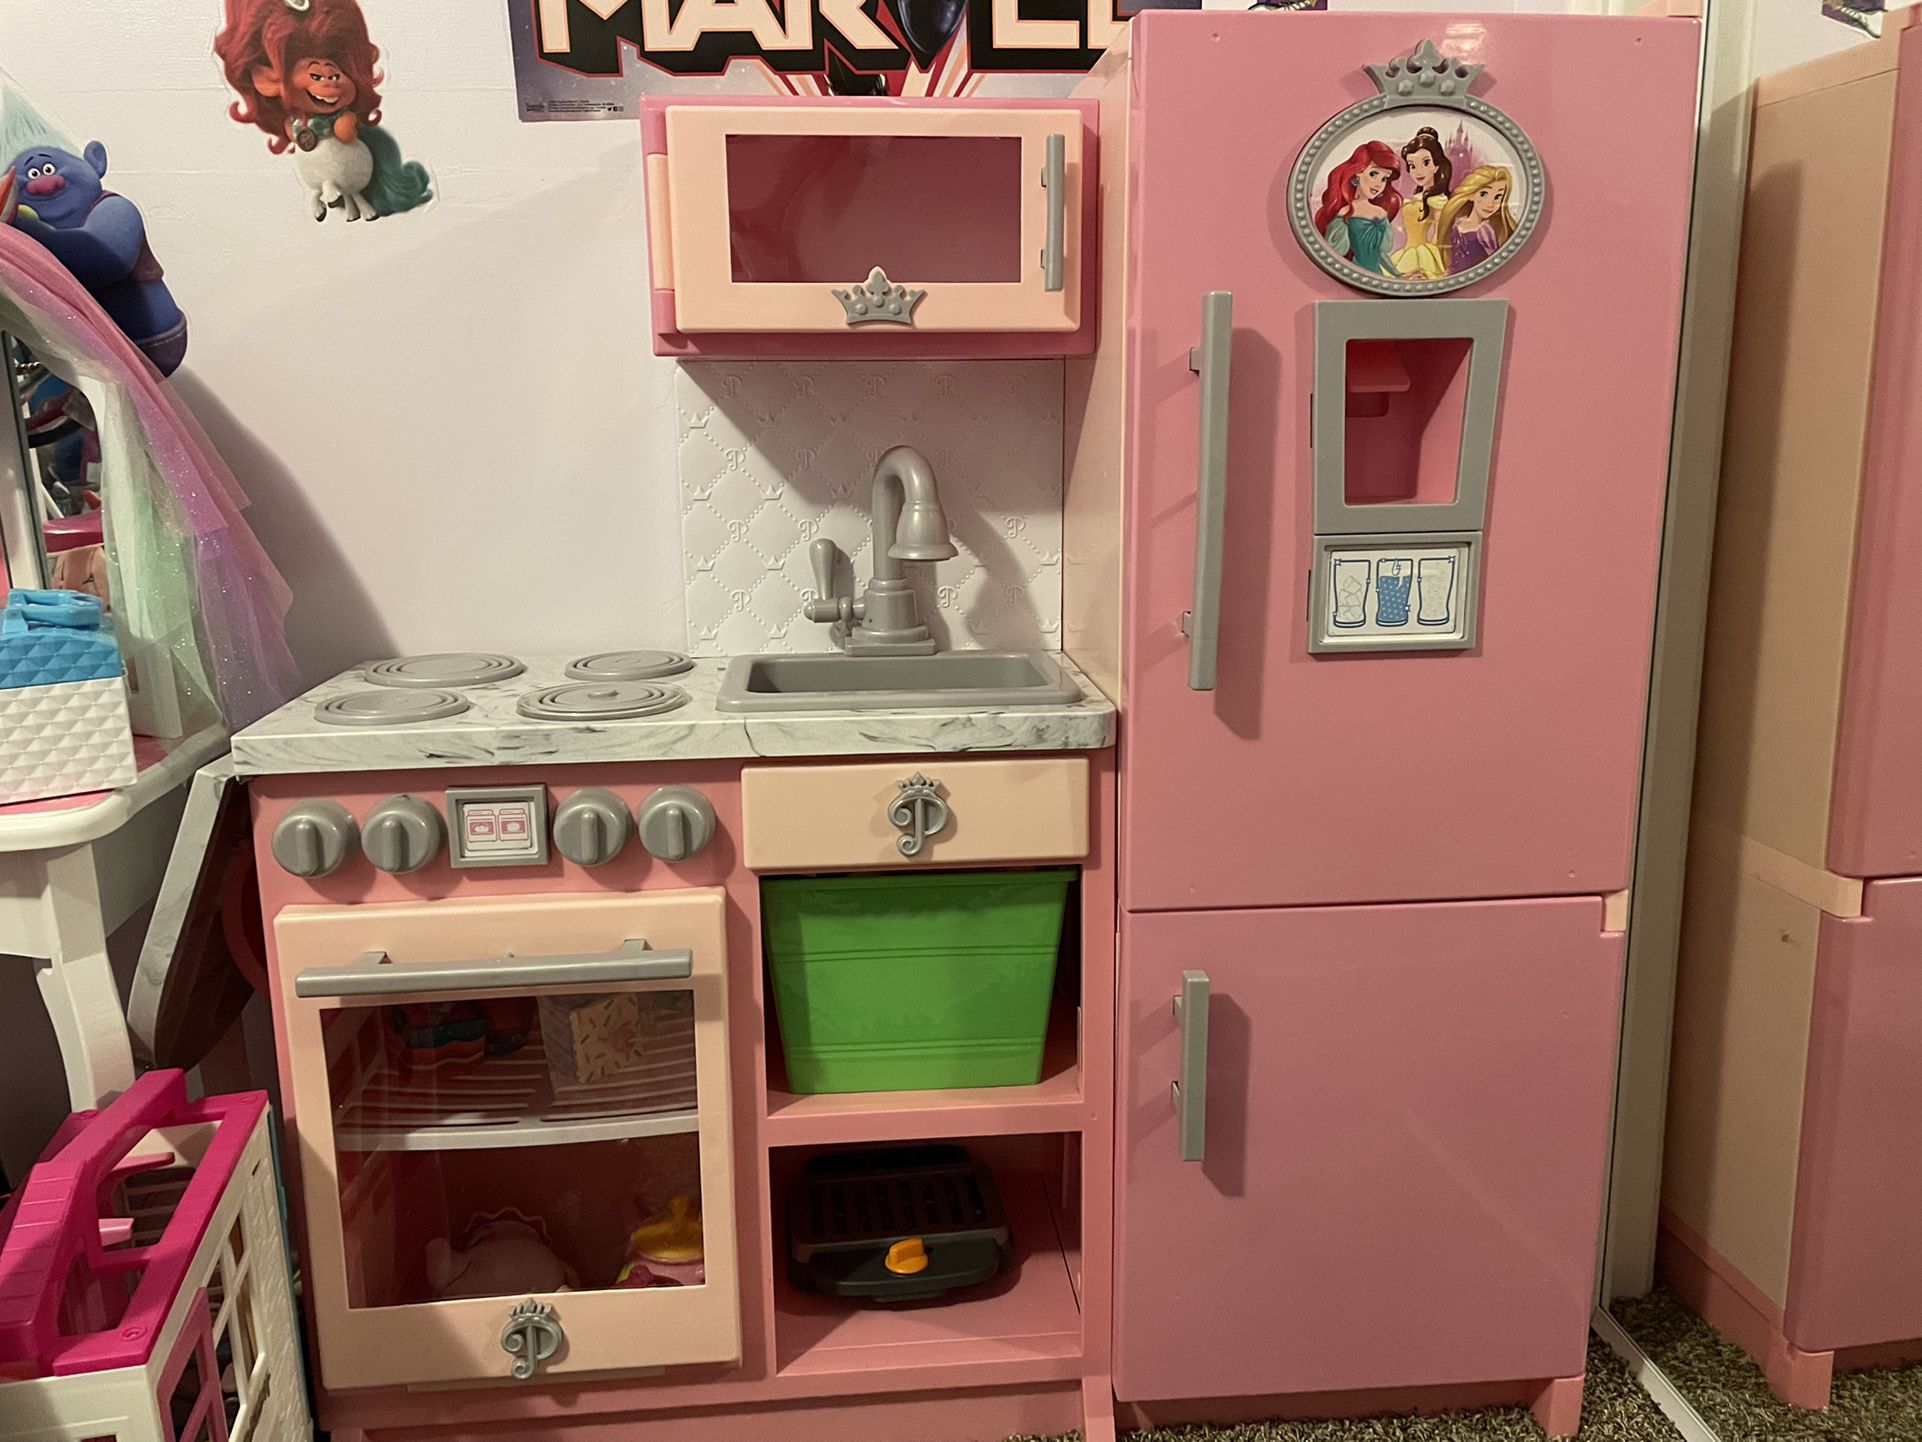 Disney Princess kitchen - toys & games - by owner - sale - craigslist